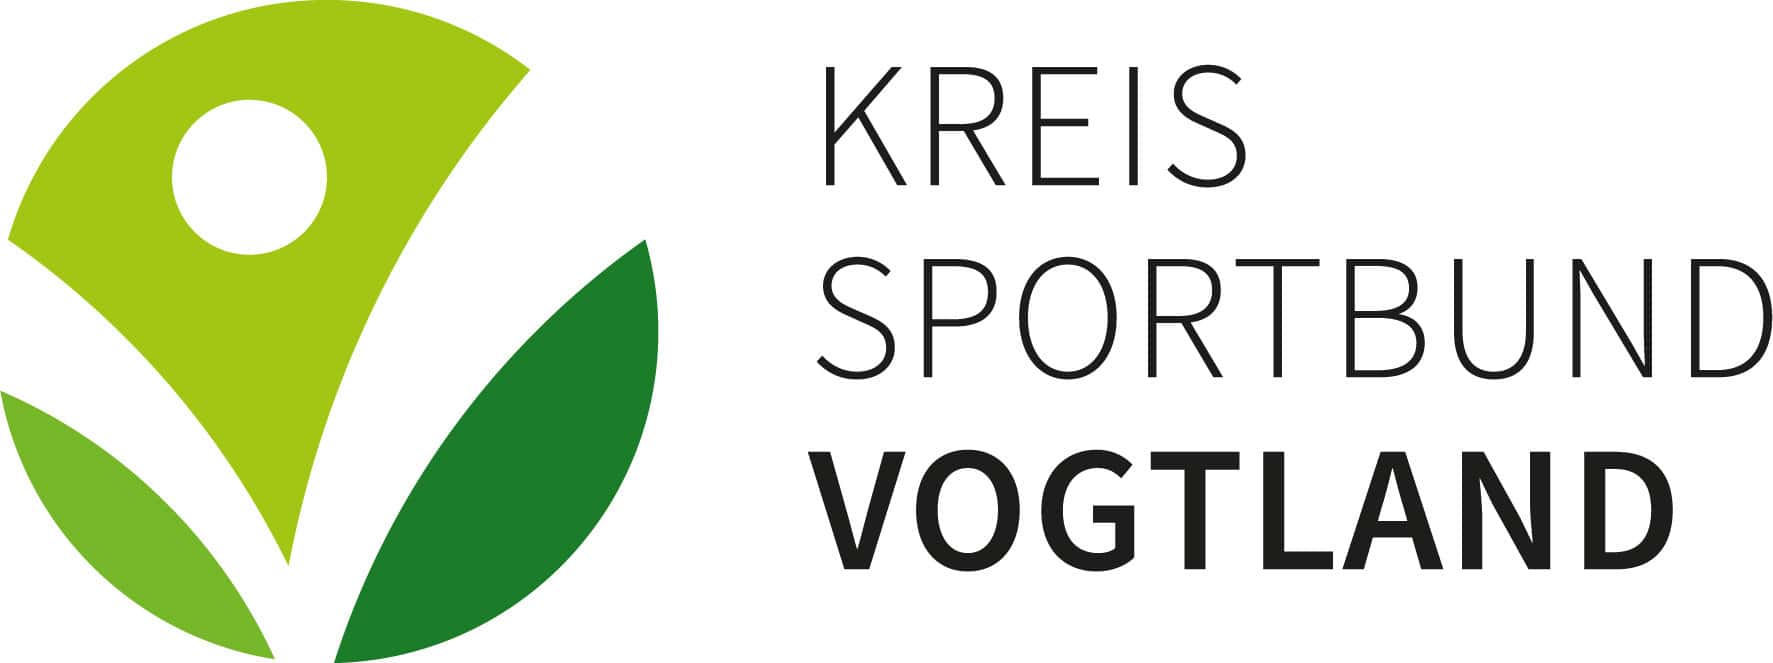 Kreis Sportbund Vogtland